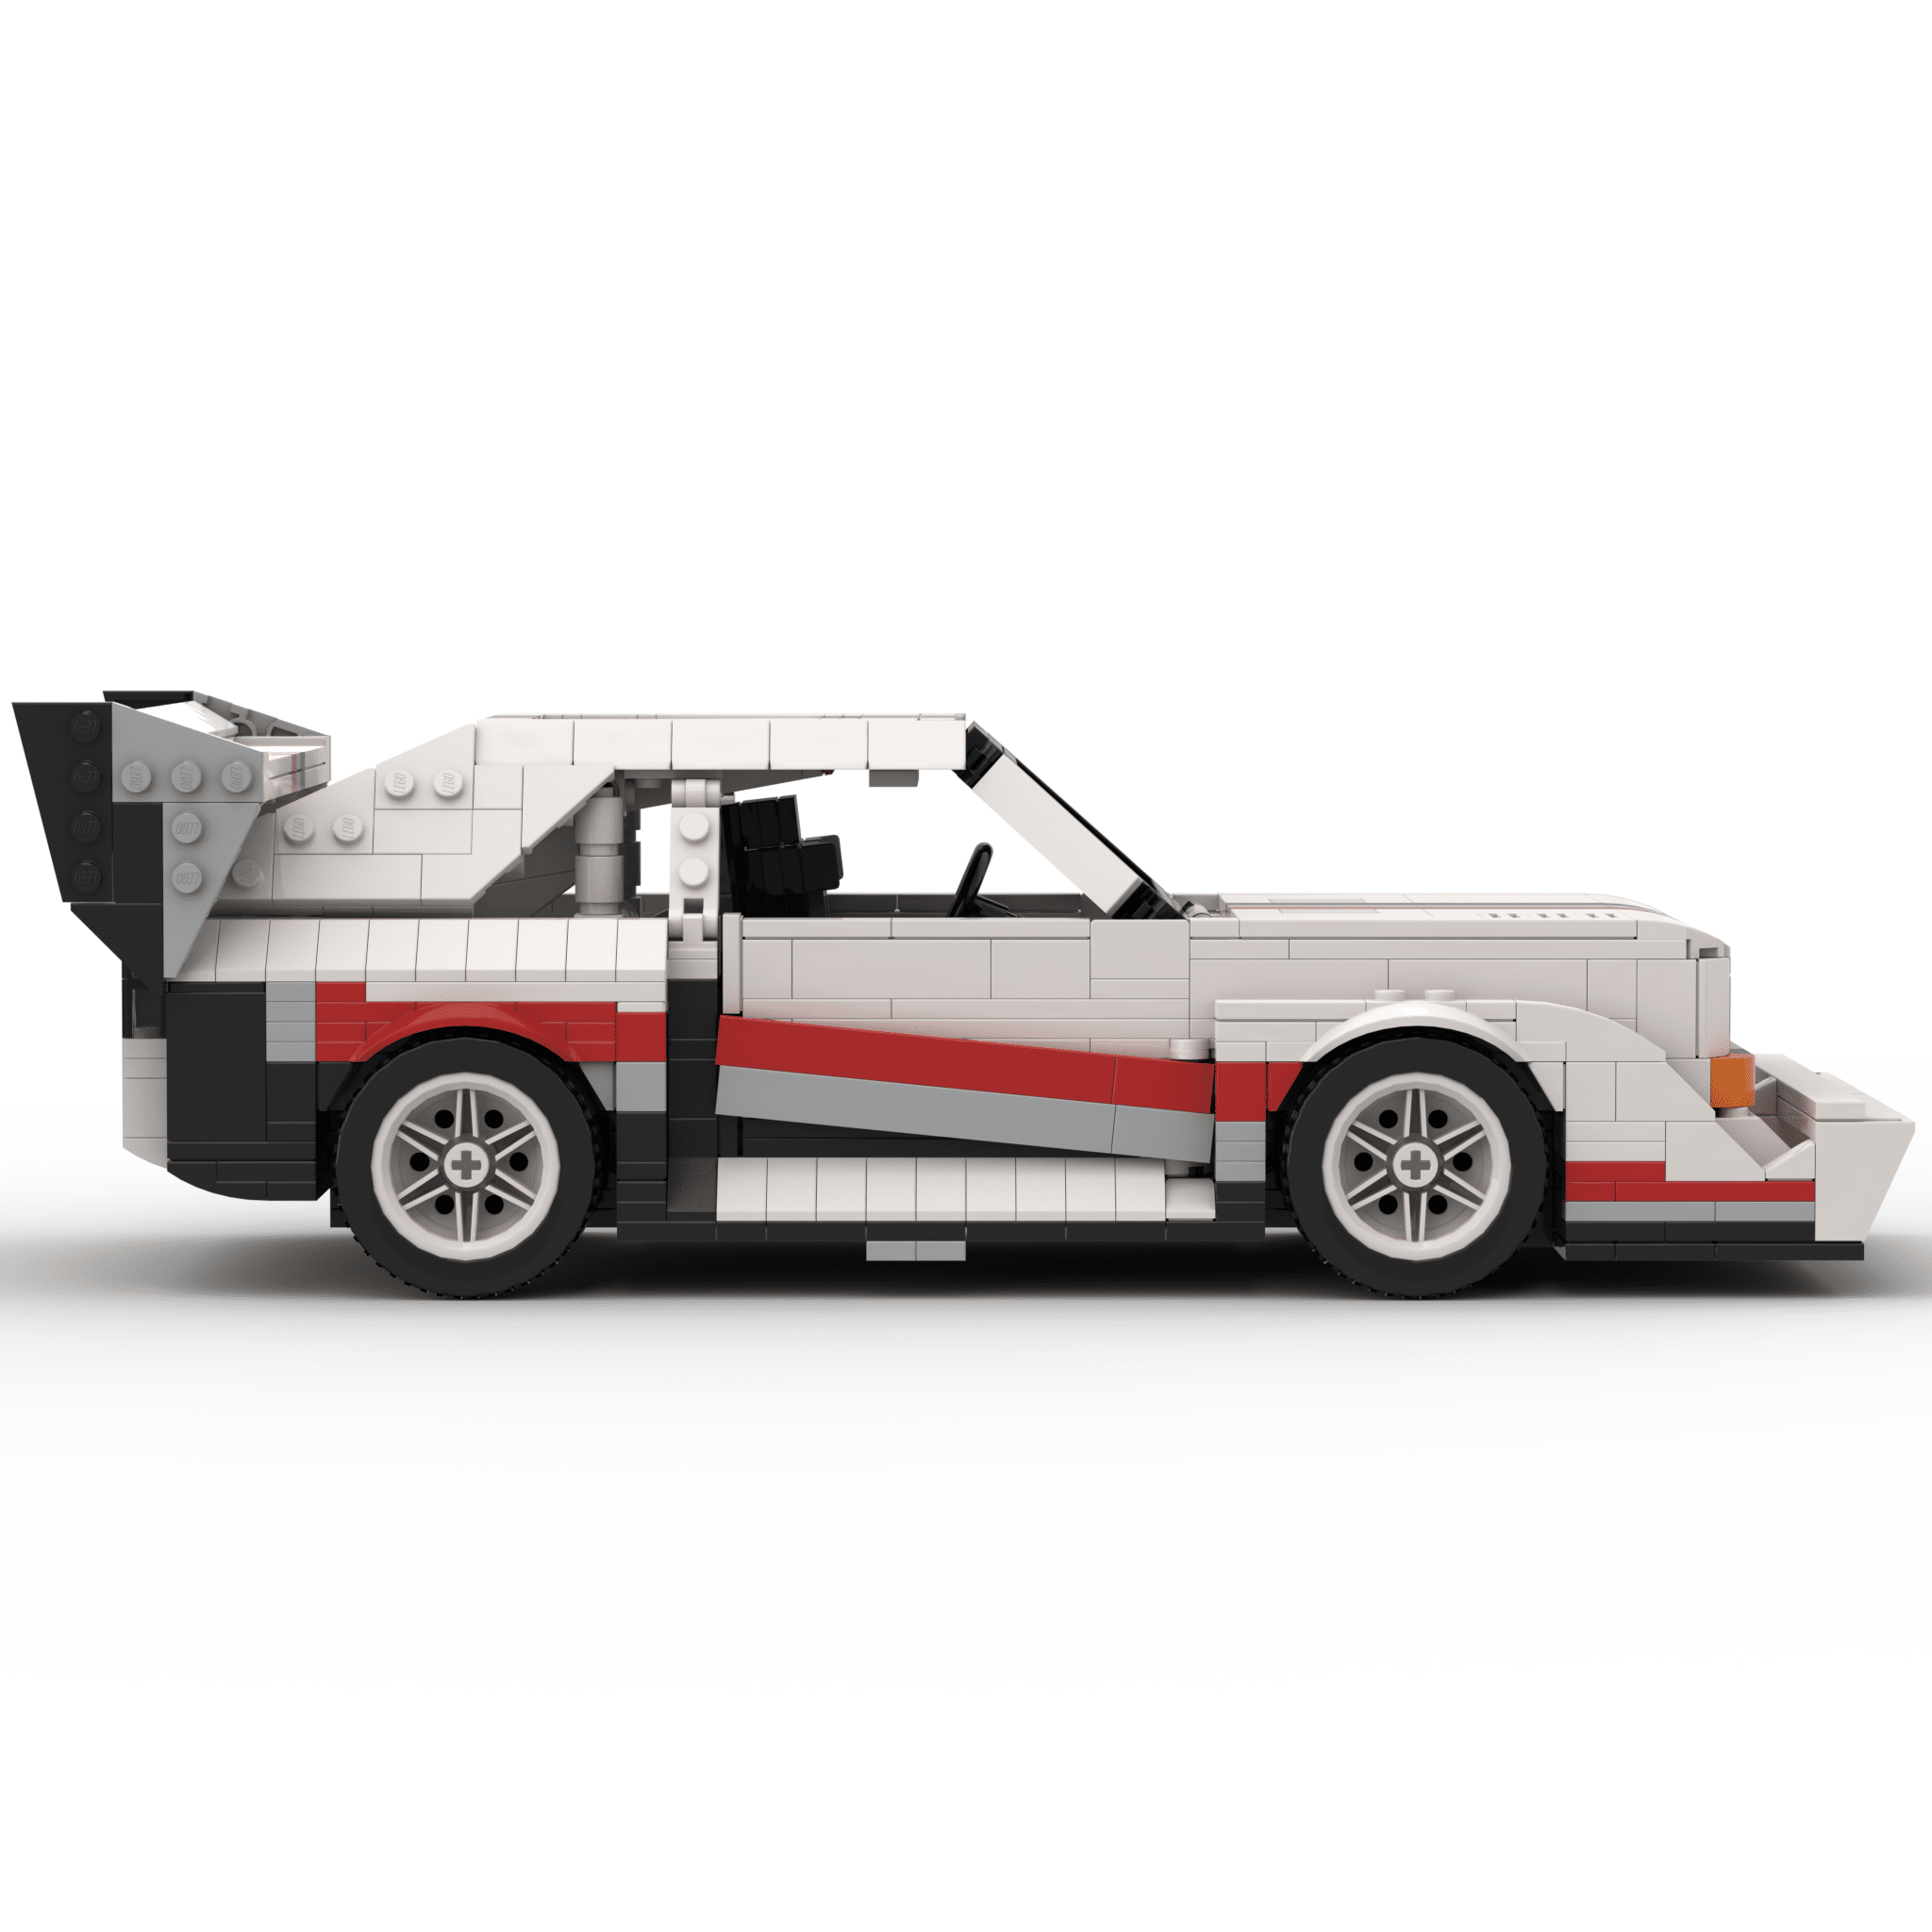 LEGO MOC Audi 80 Quattro Competition by Brixxbert